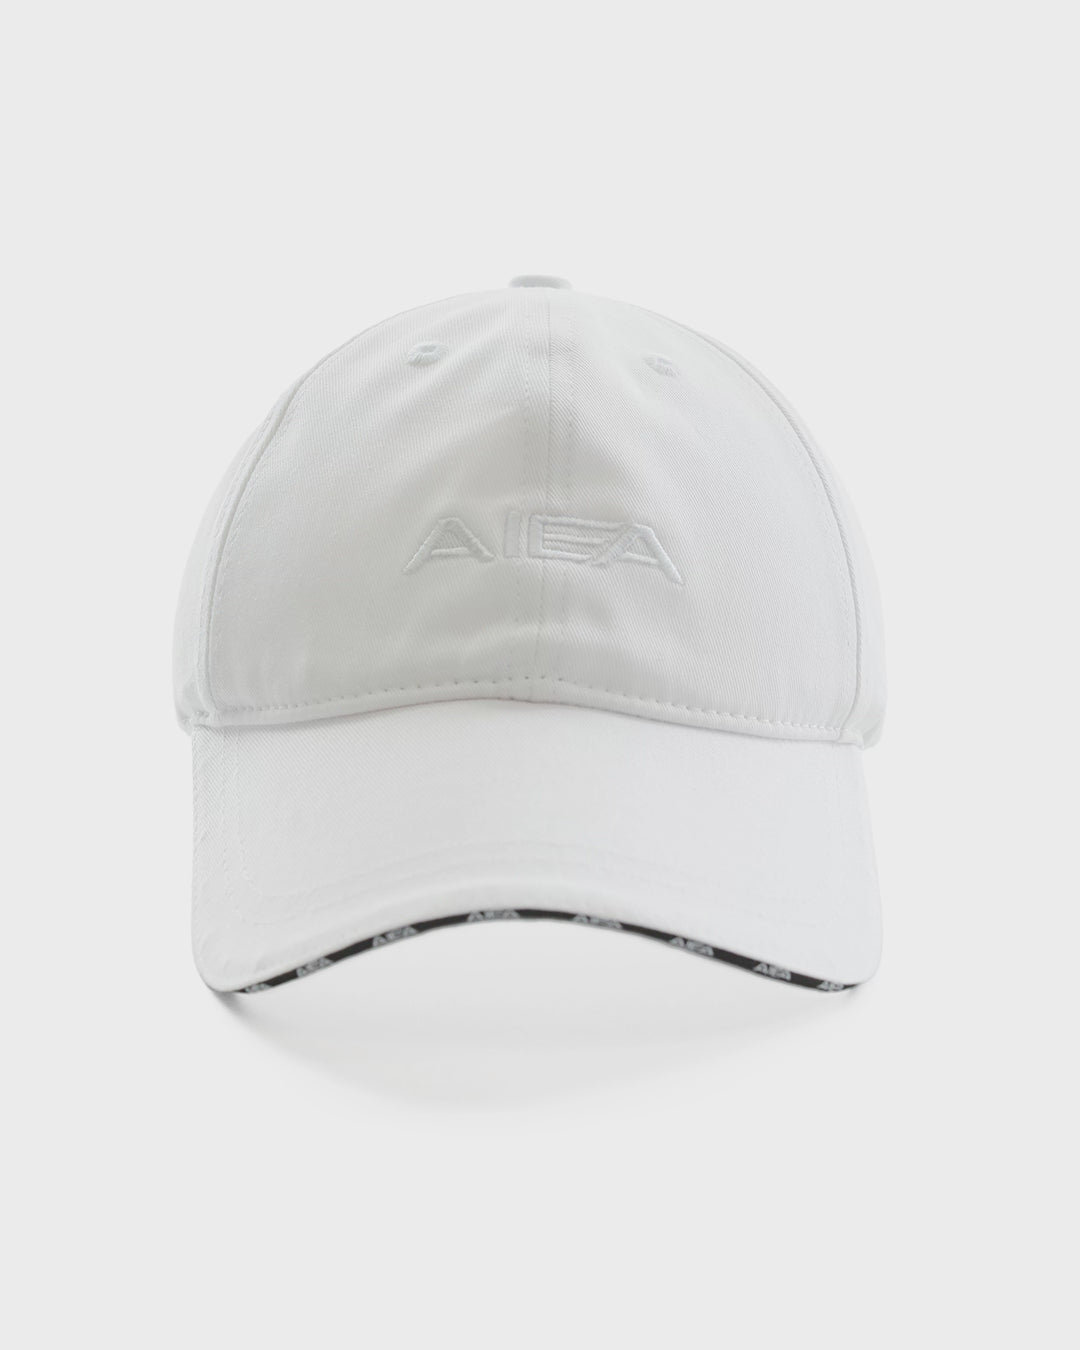 Black & White Strapback Hat – AIEA Golf